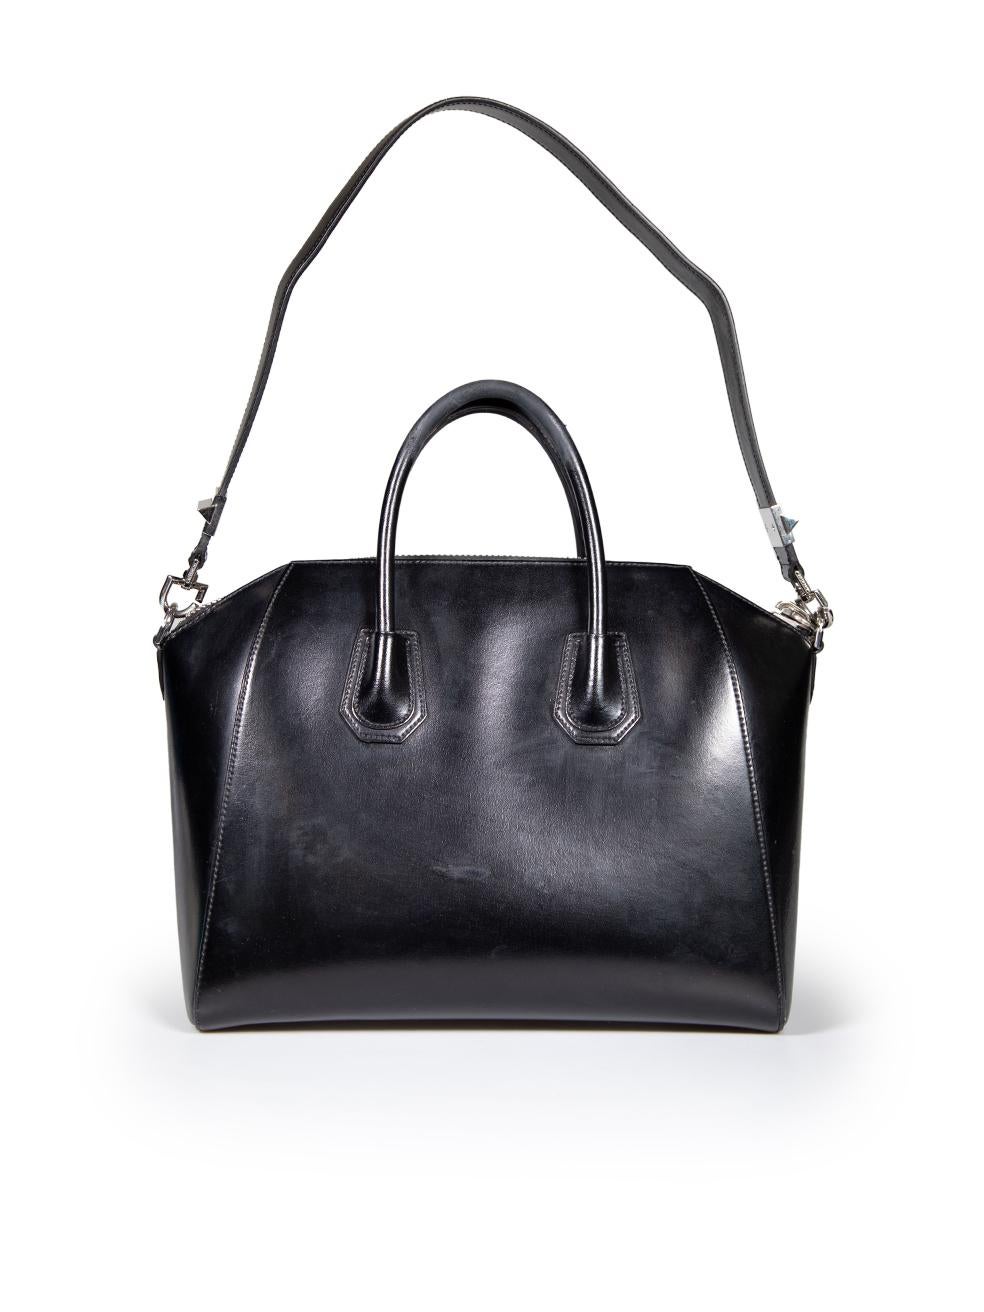 Givenchy Black Leather Medium Antigona Handbag In Good Condition For Sale In London, GB